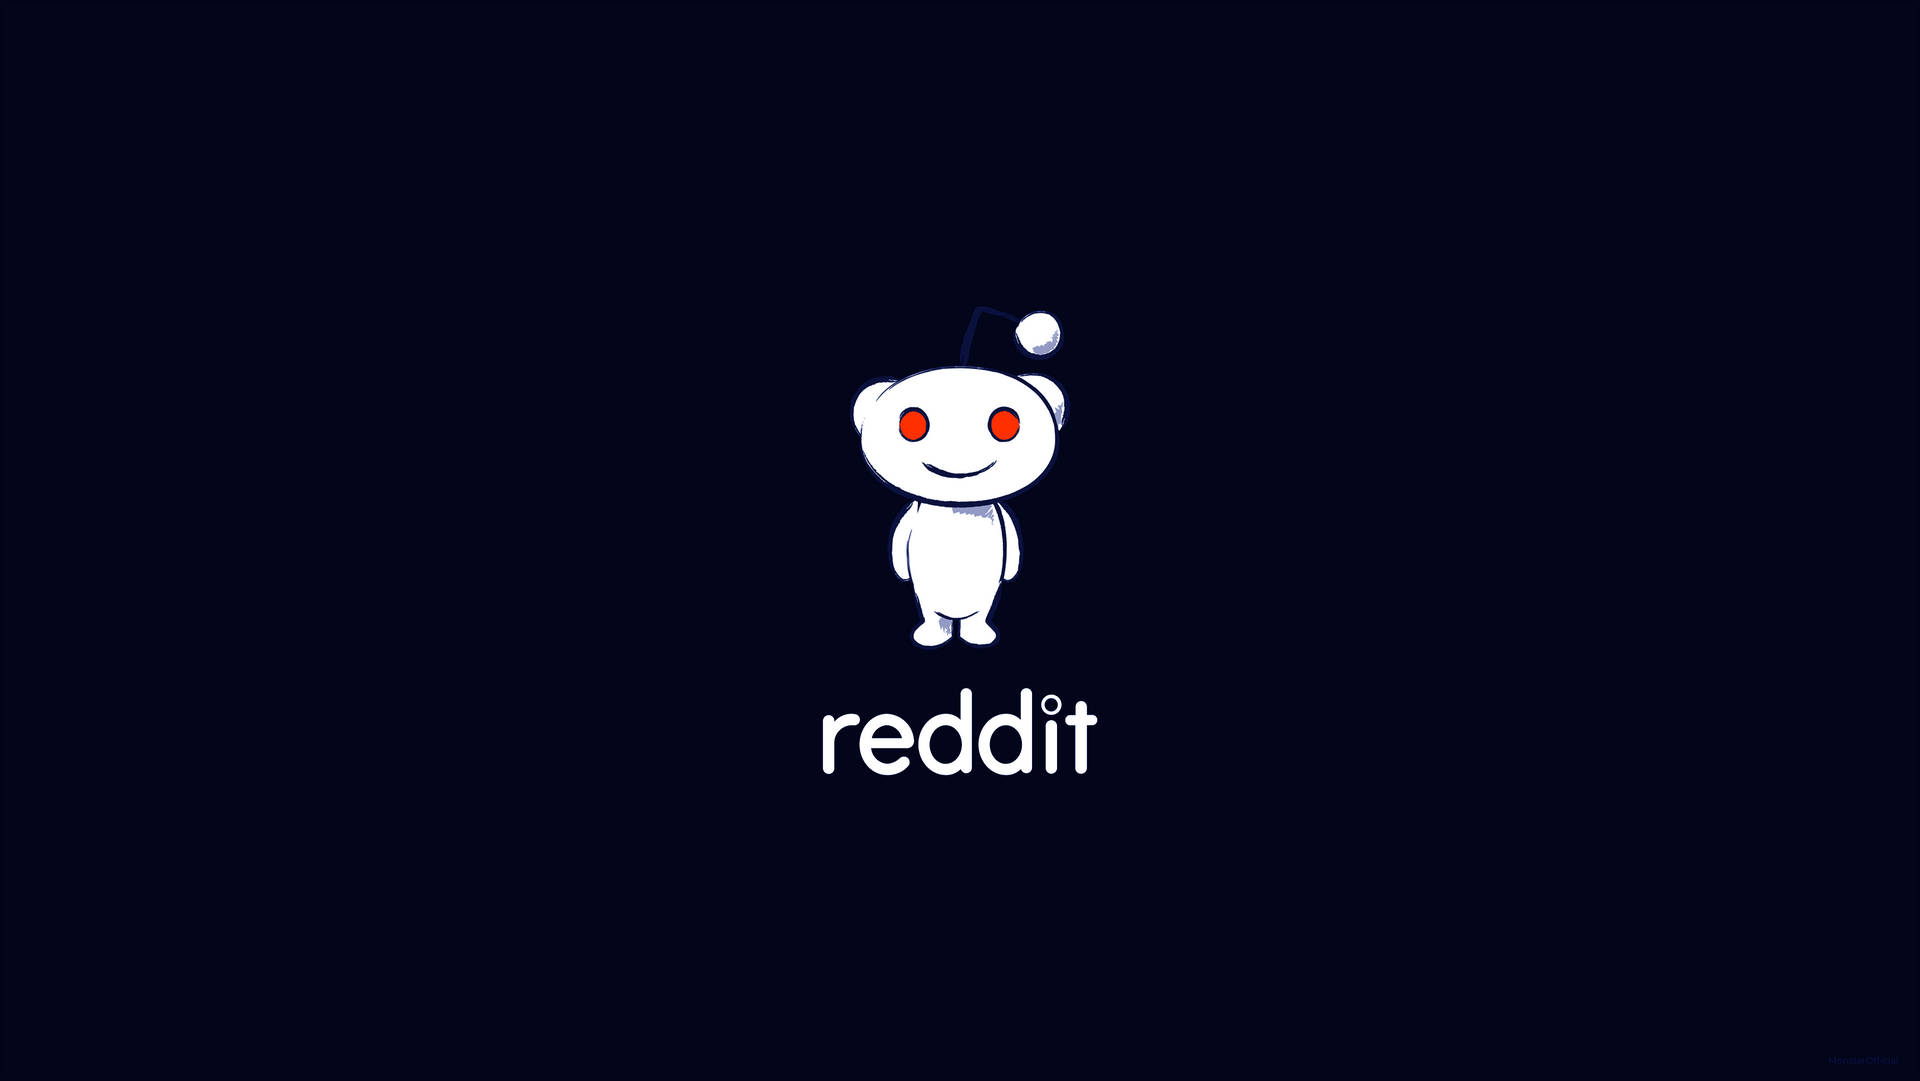 Black Minimal Reddit Logo And Title Wallpaper